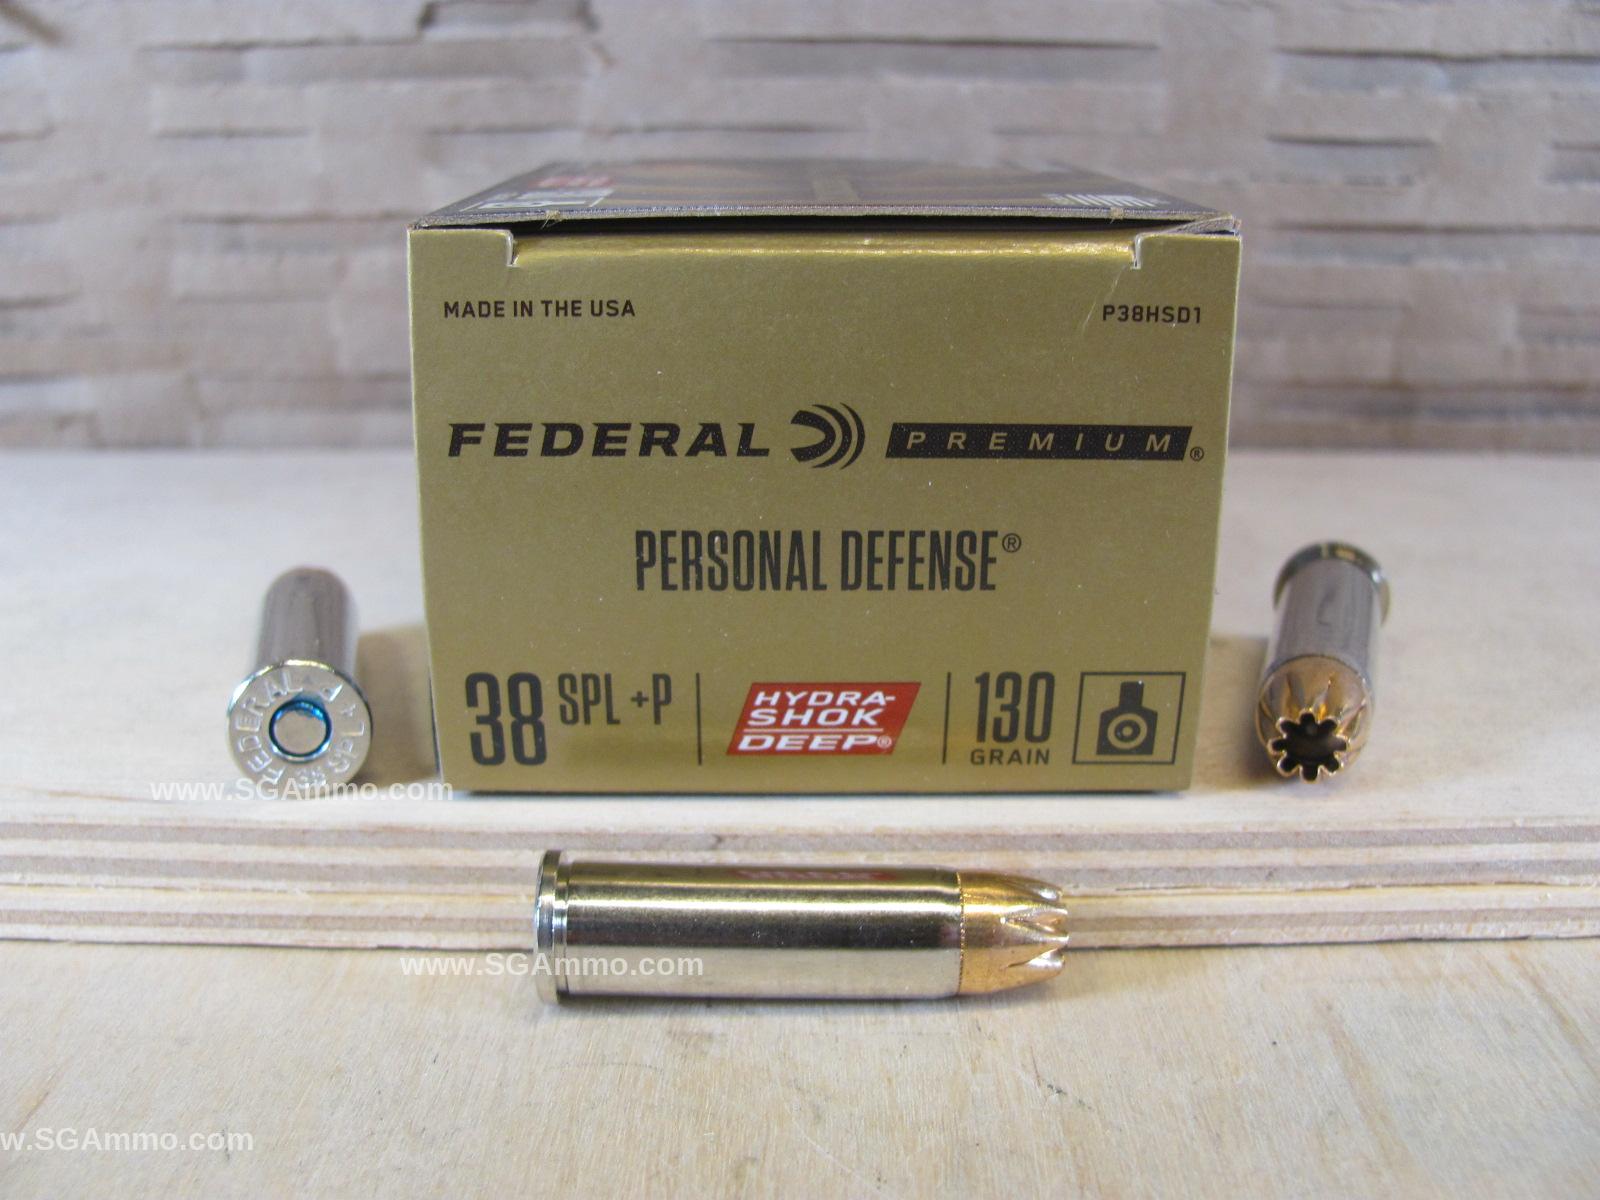 200 Round Case - 38 Special 130 Grain +P Hydra-Shok Deep Federal Personal Defense Ammo - P38HSD1